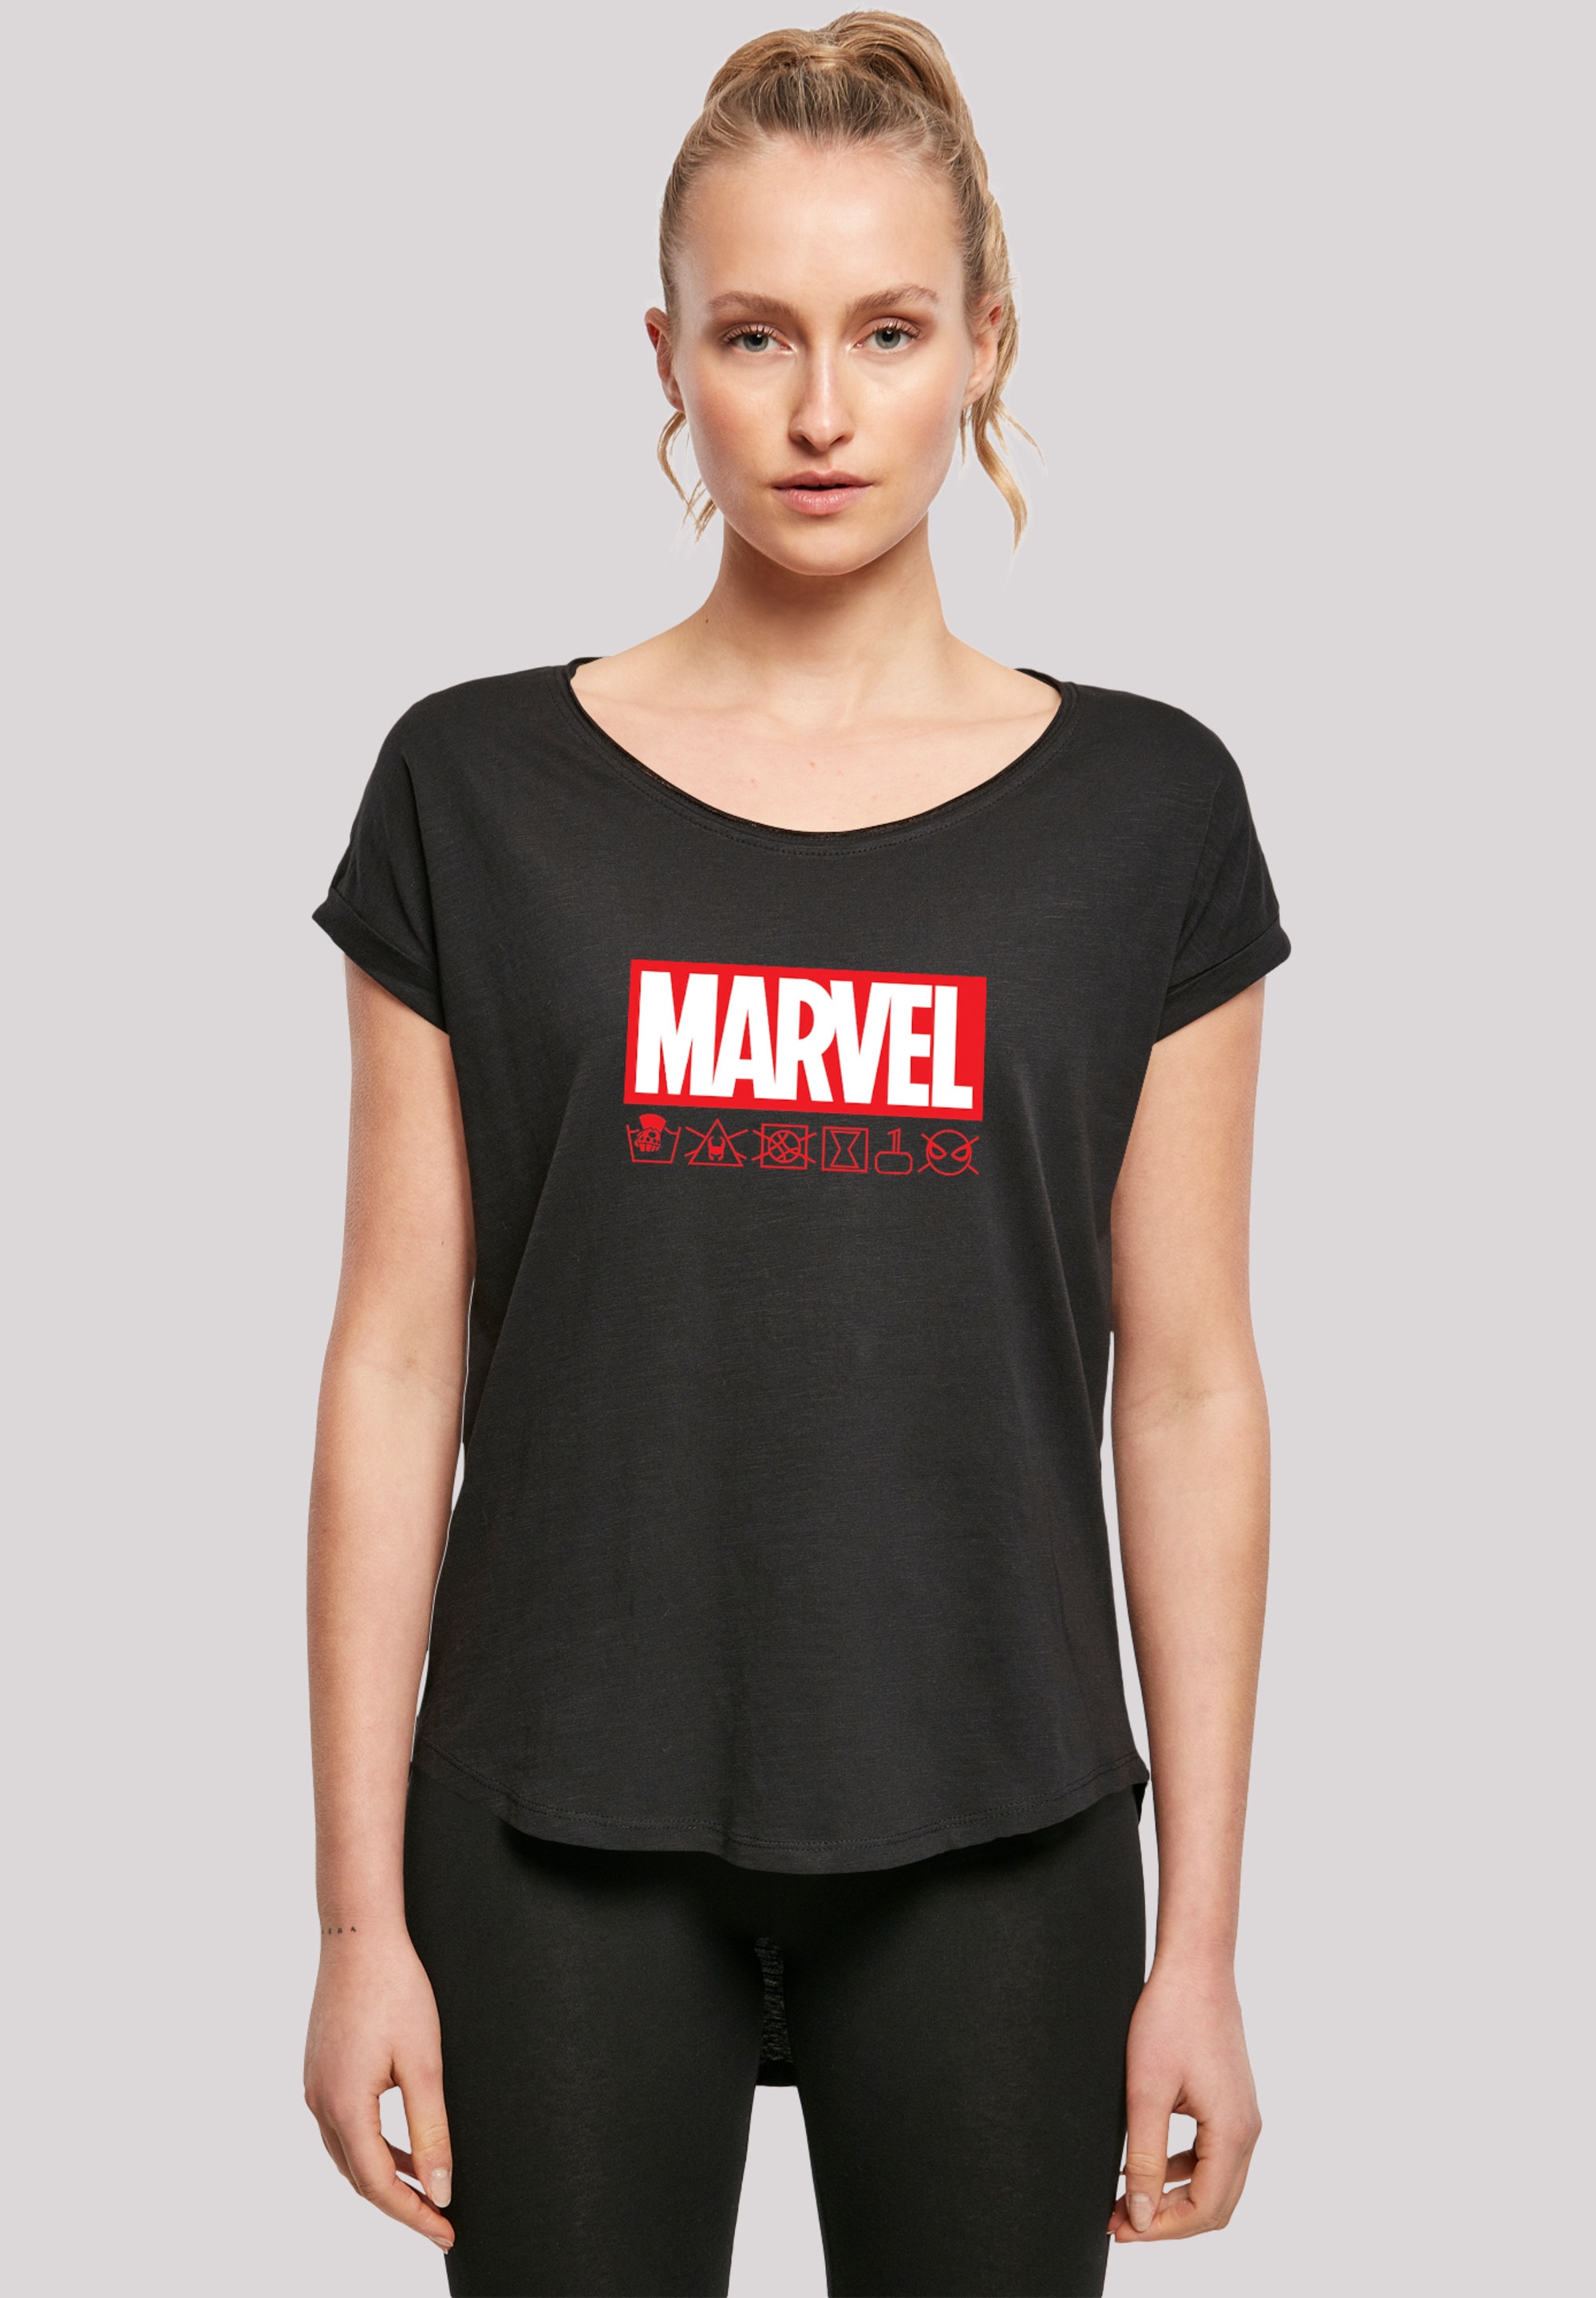 T-Shirt Waschsymbole«, F4NT4STIC shoppen Logo »Marvel Print